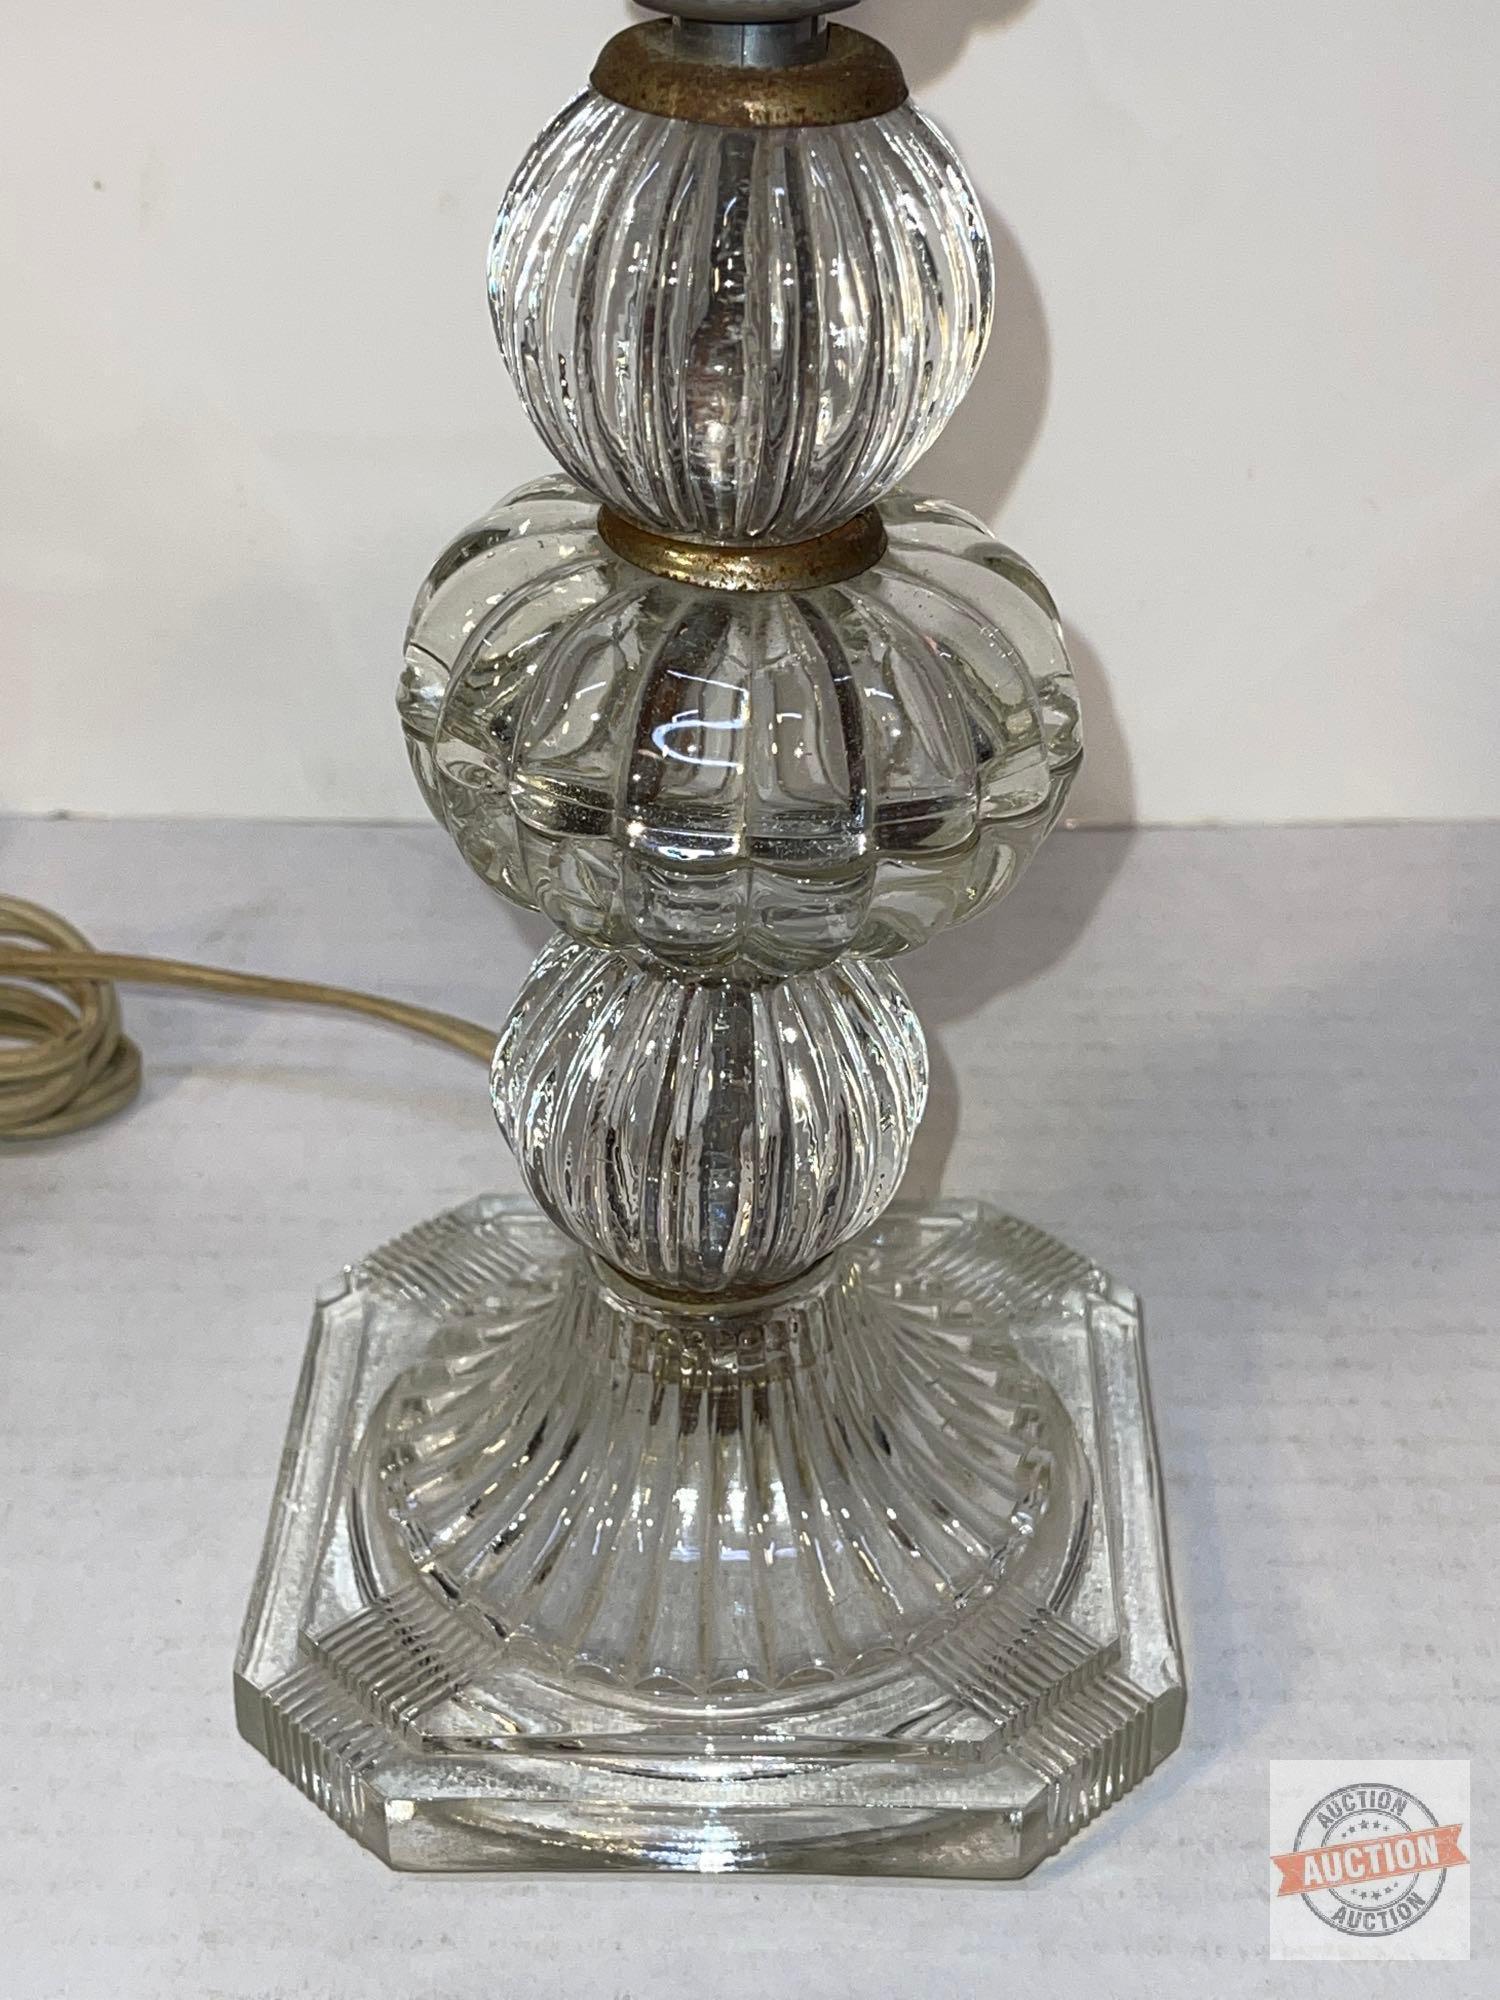 2 vintage lamps - 1 table lamp, 1 dresser lamp